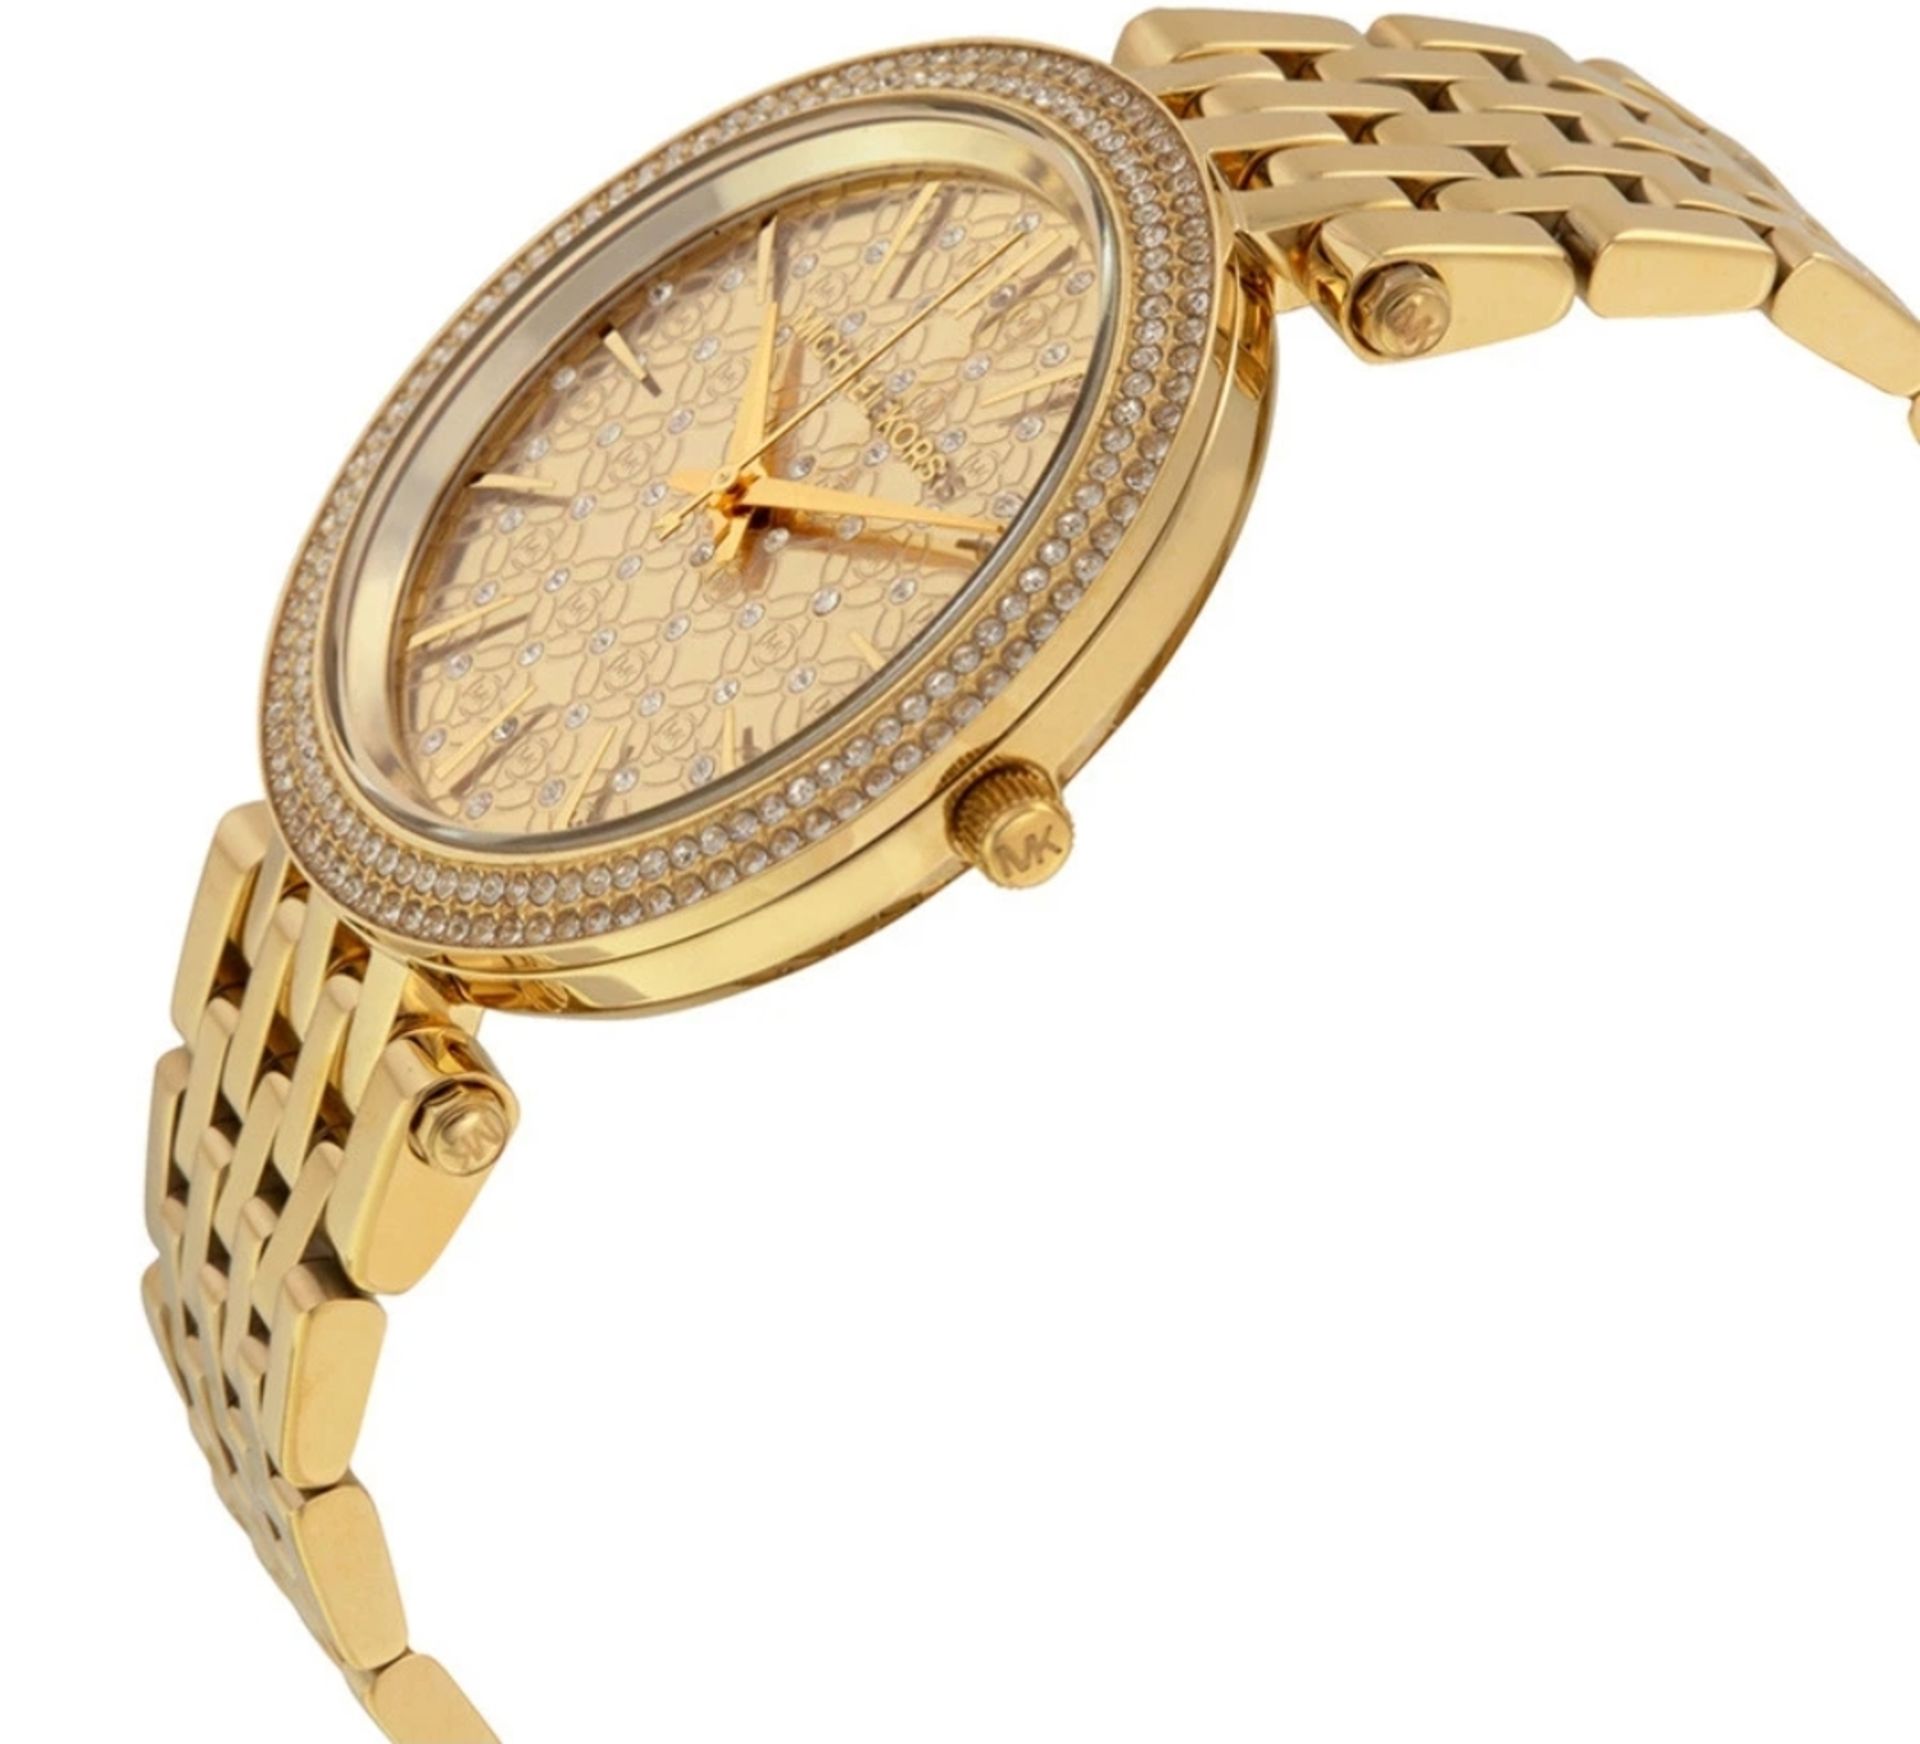 Michael Kors MK3398 Darci Gold-Tone Stainless Steel Ladies Watch - Image 4 of 6